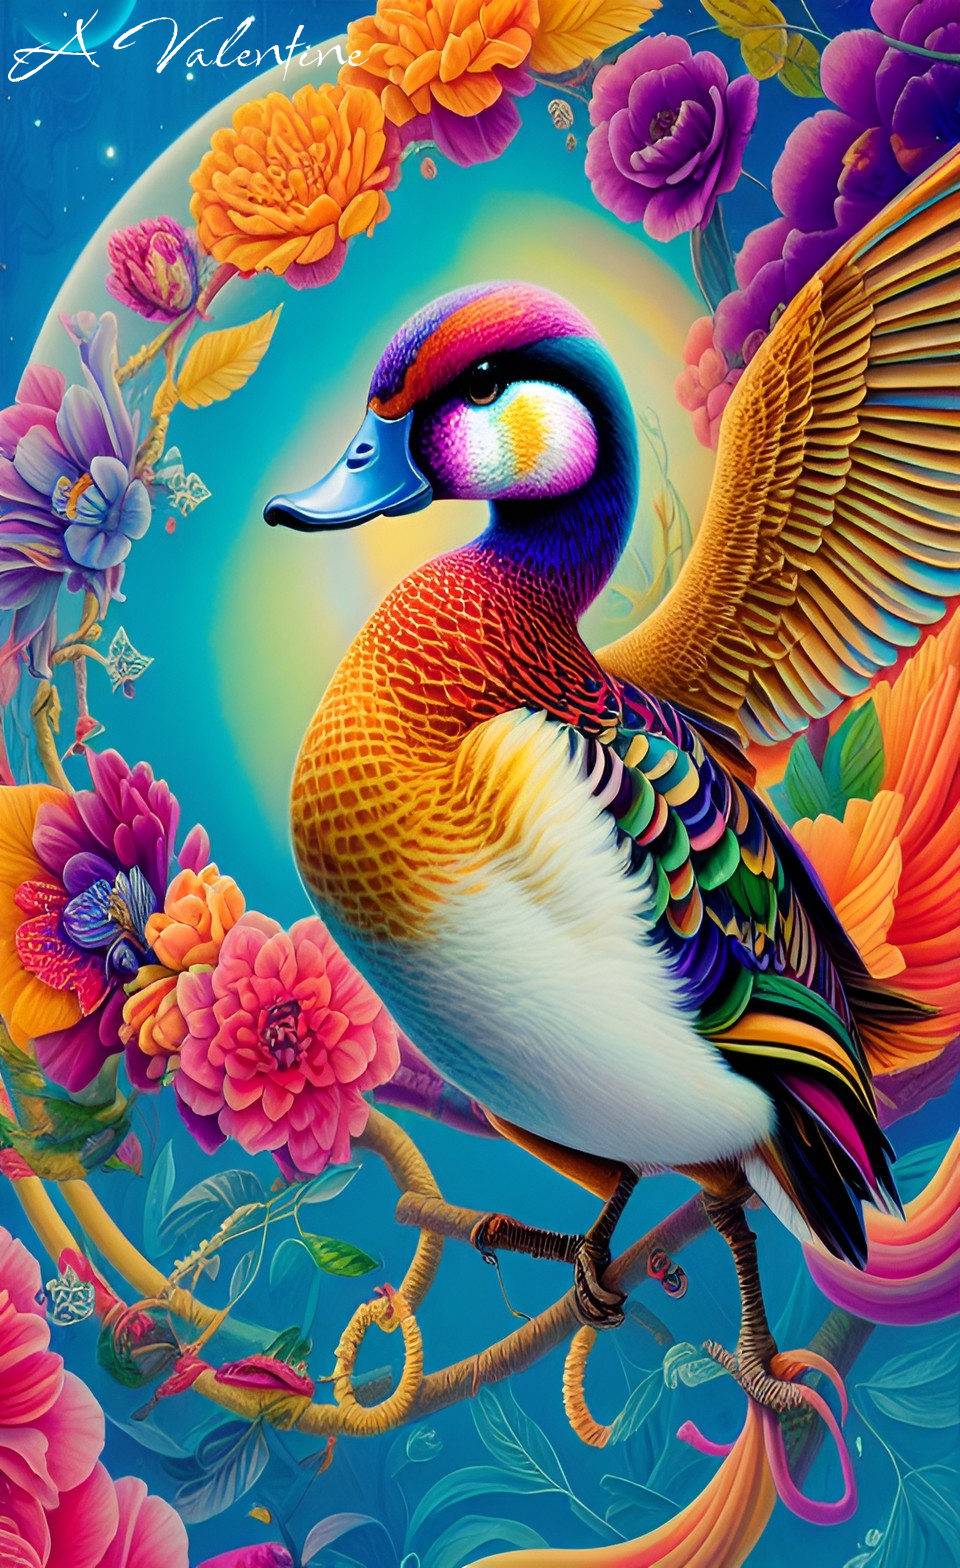 Lisa Frank Inspired Series) Duck by LadyValsArt1983 on DeviantArt